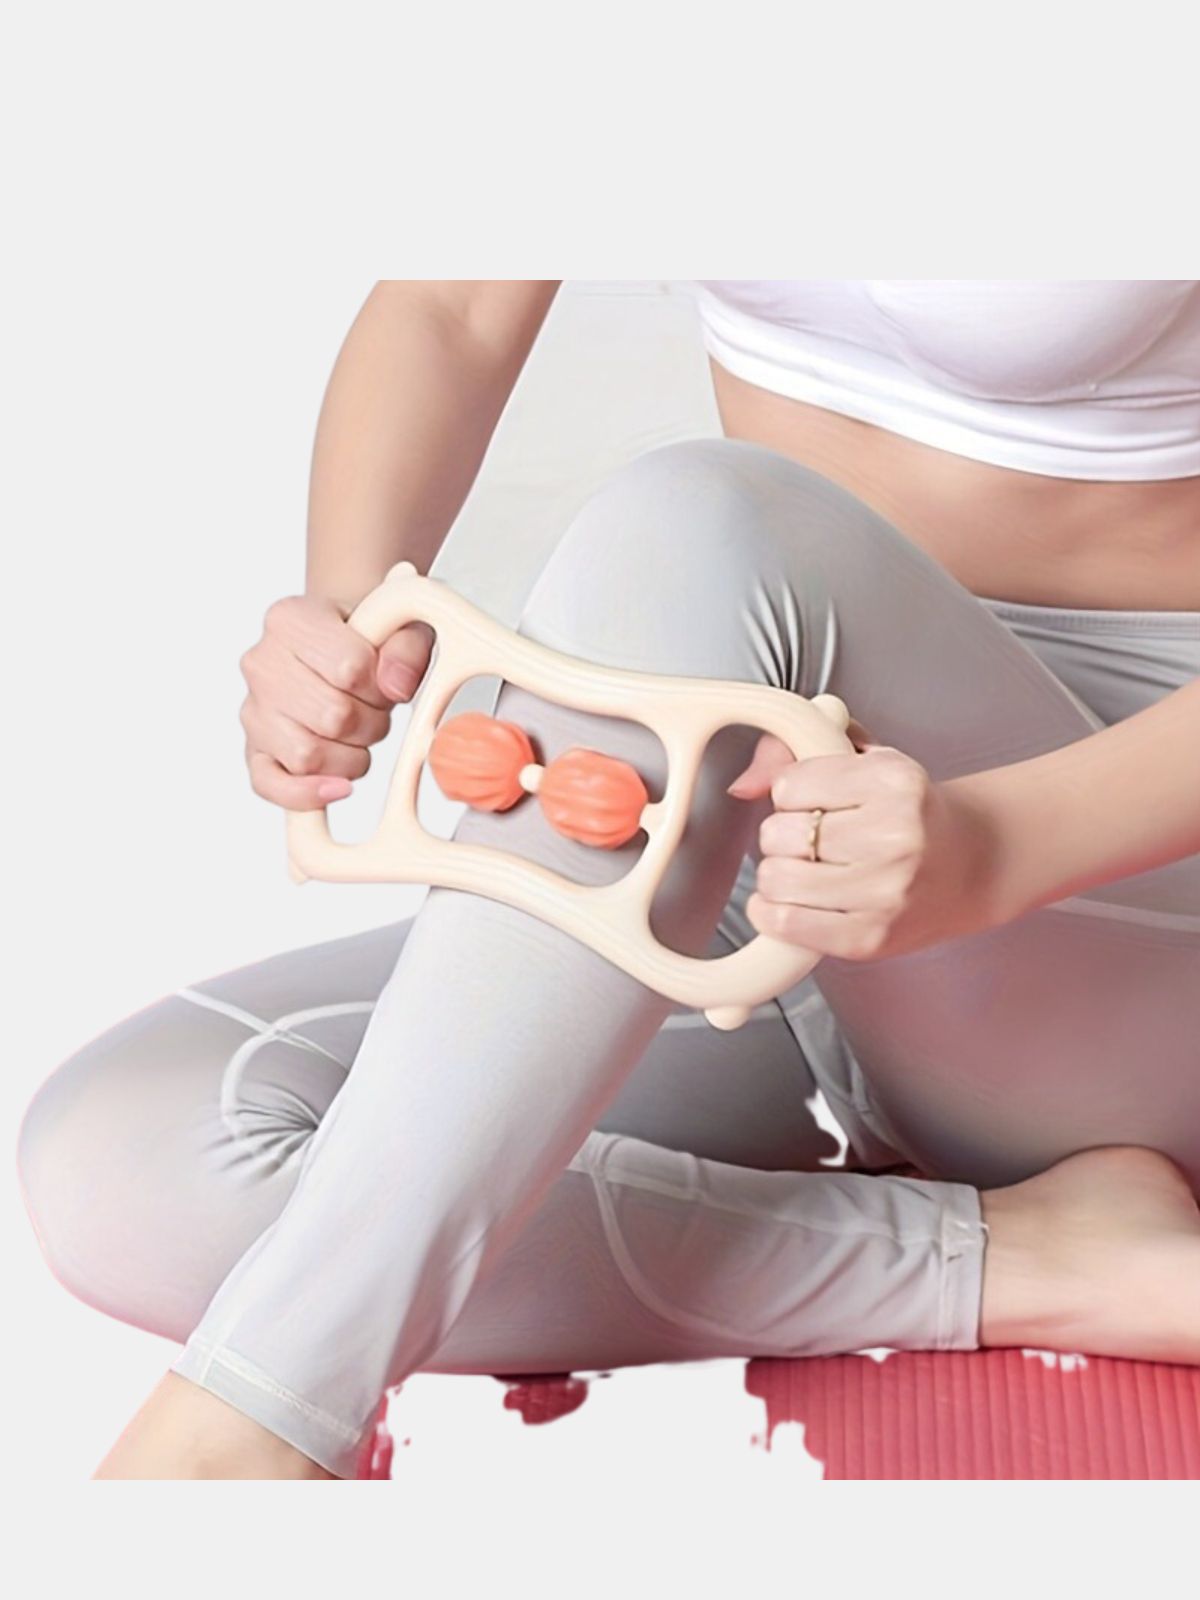 Vigor Portable Roller Massage Back Arm Stretching Yoga Fitness Equipment  For Women Pilates (Bulk 3 Sets)